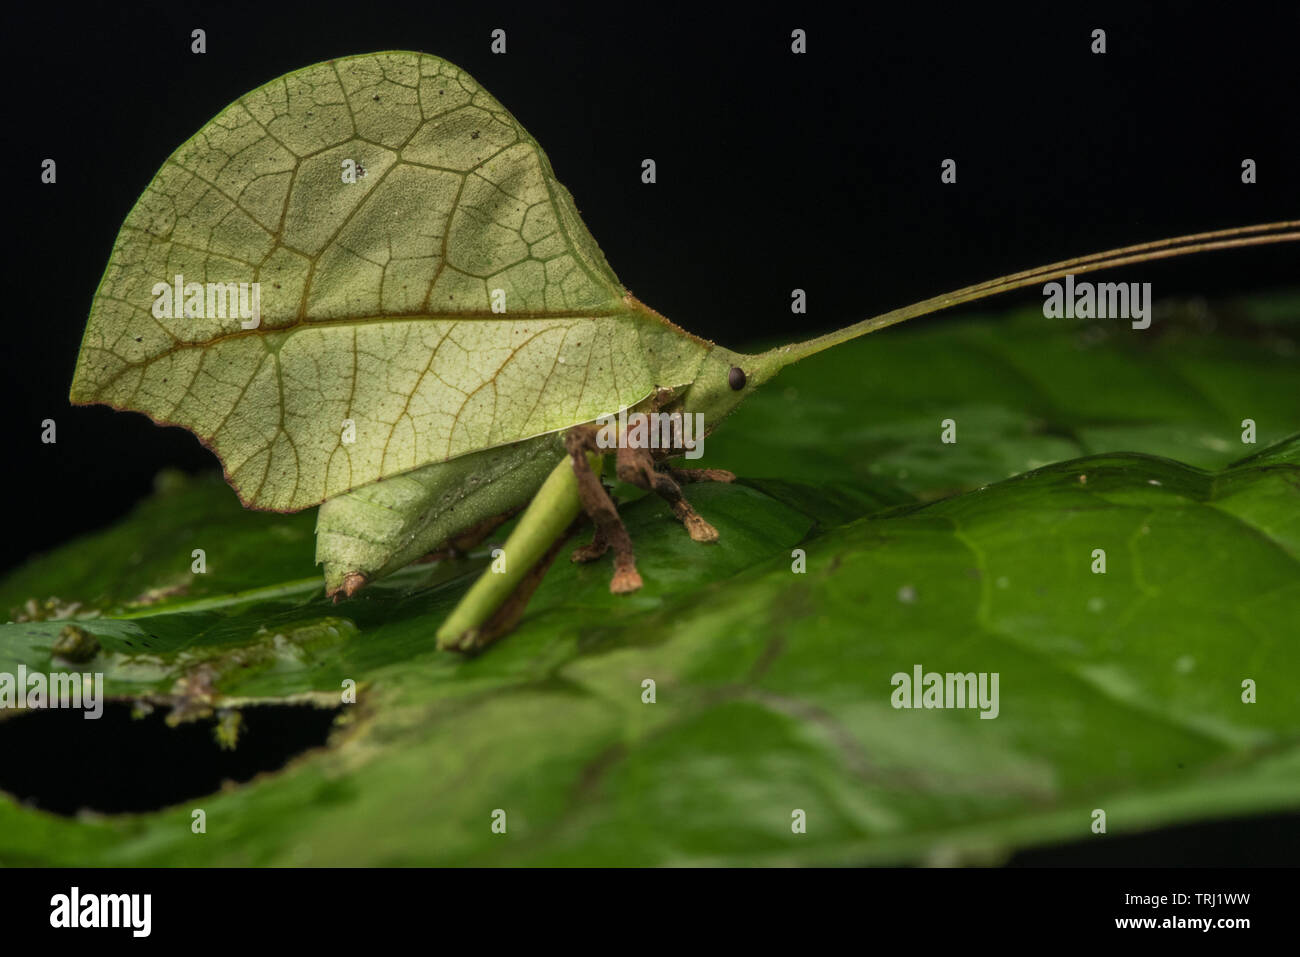 Ein Blatt nachahmen katydid Hiding in plain Sight auf ein Blatt im Amazonas Regenwald in Yasuni Nationalpark, Ecuador. Stockfoto